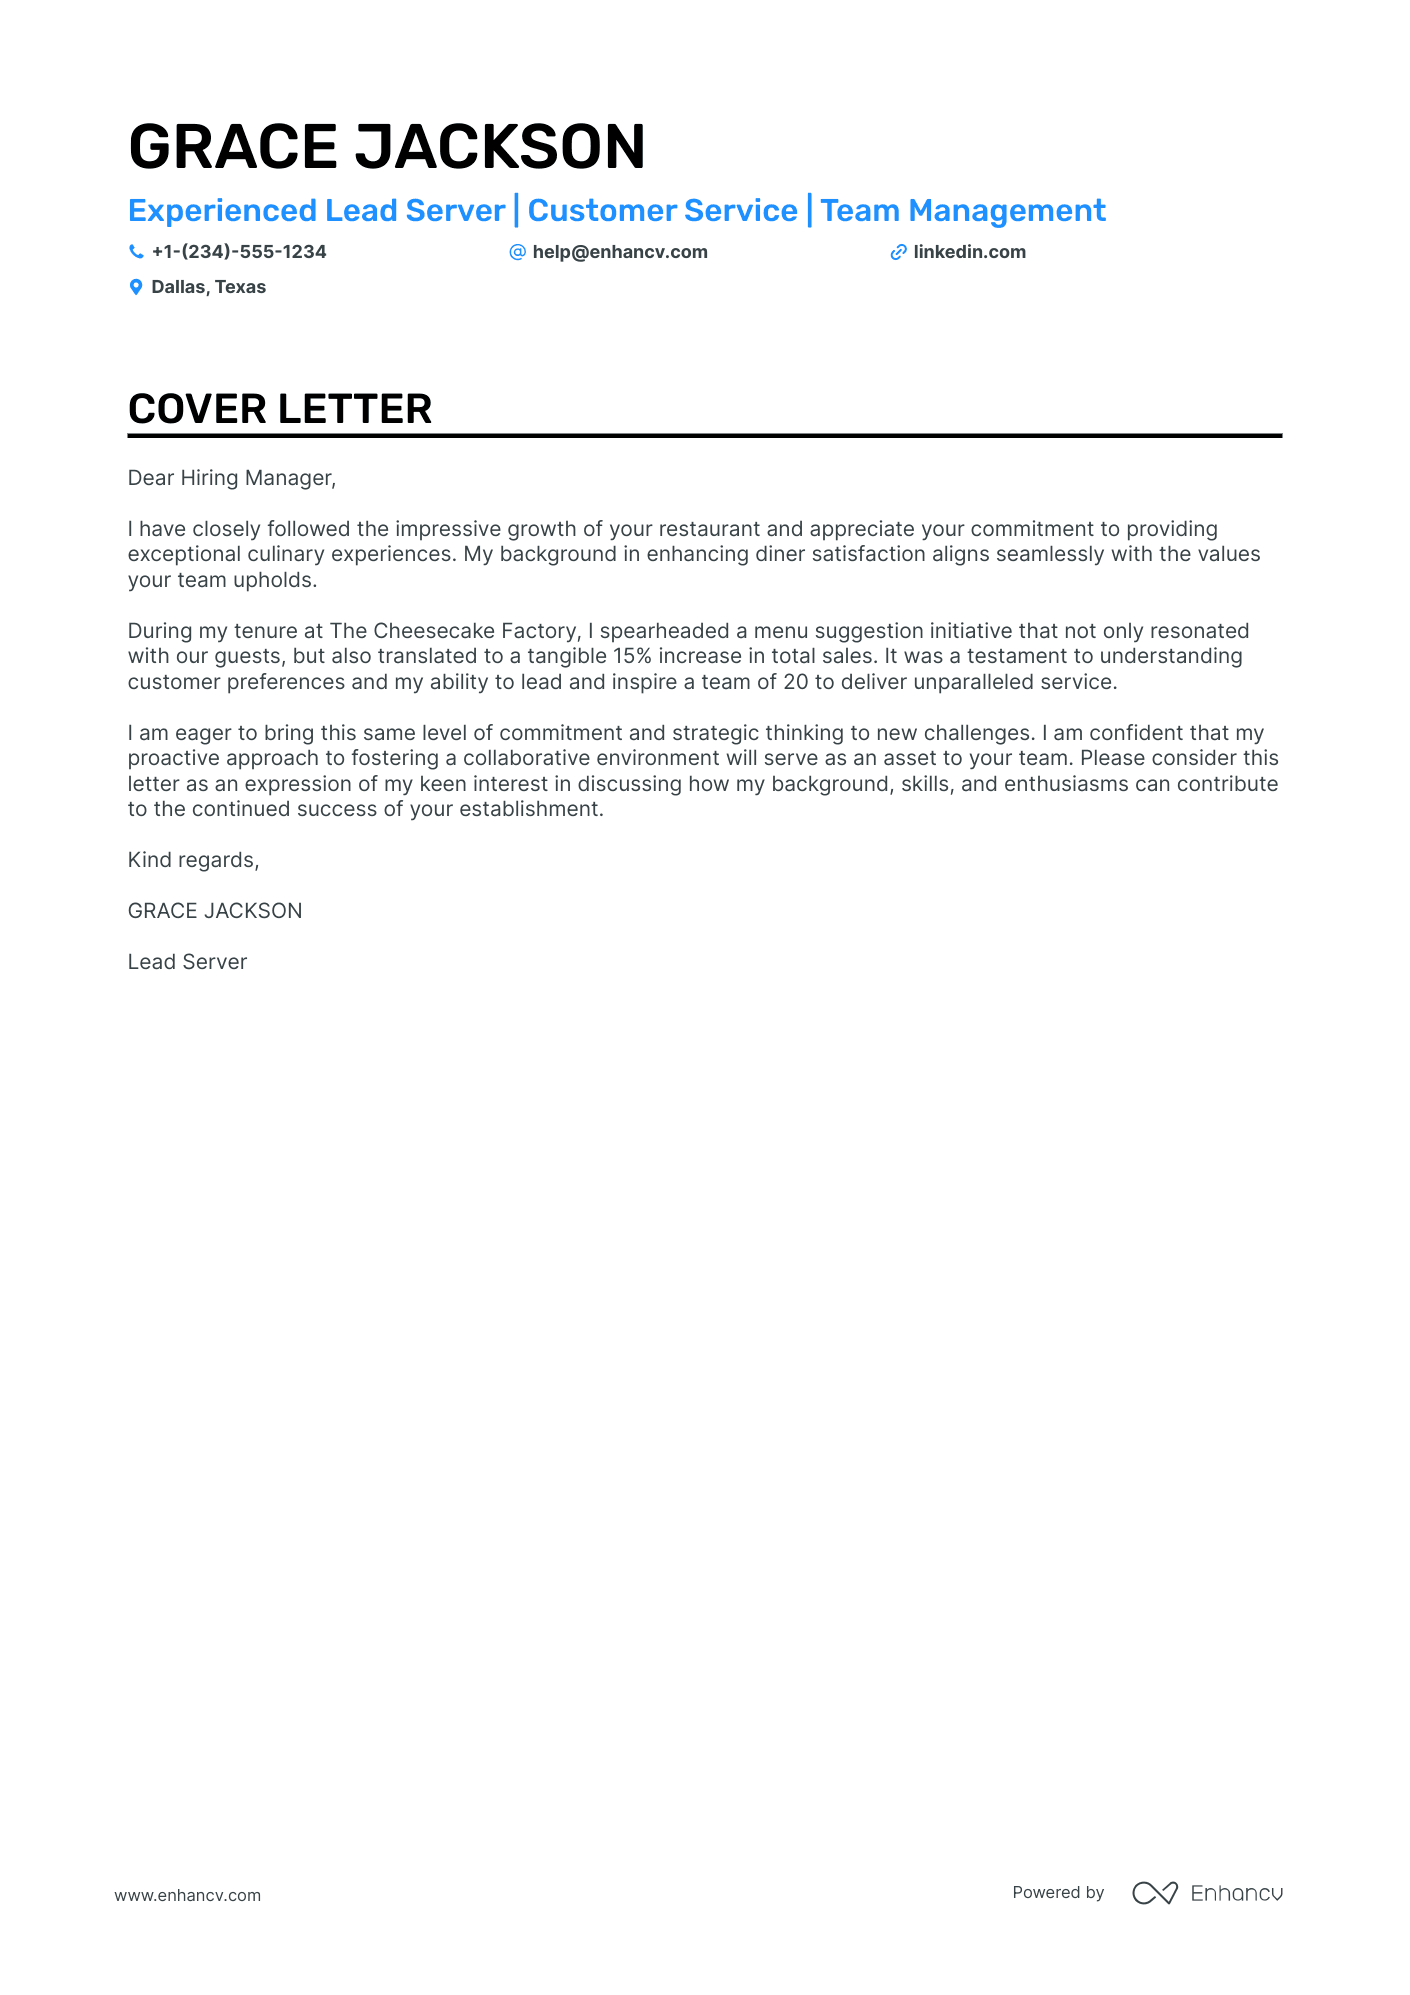 cover letter server position